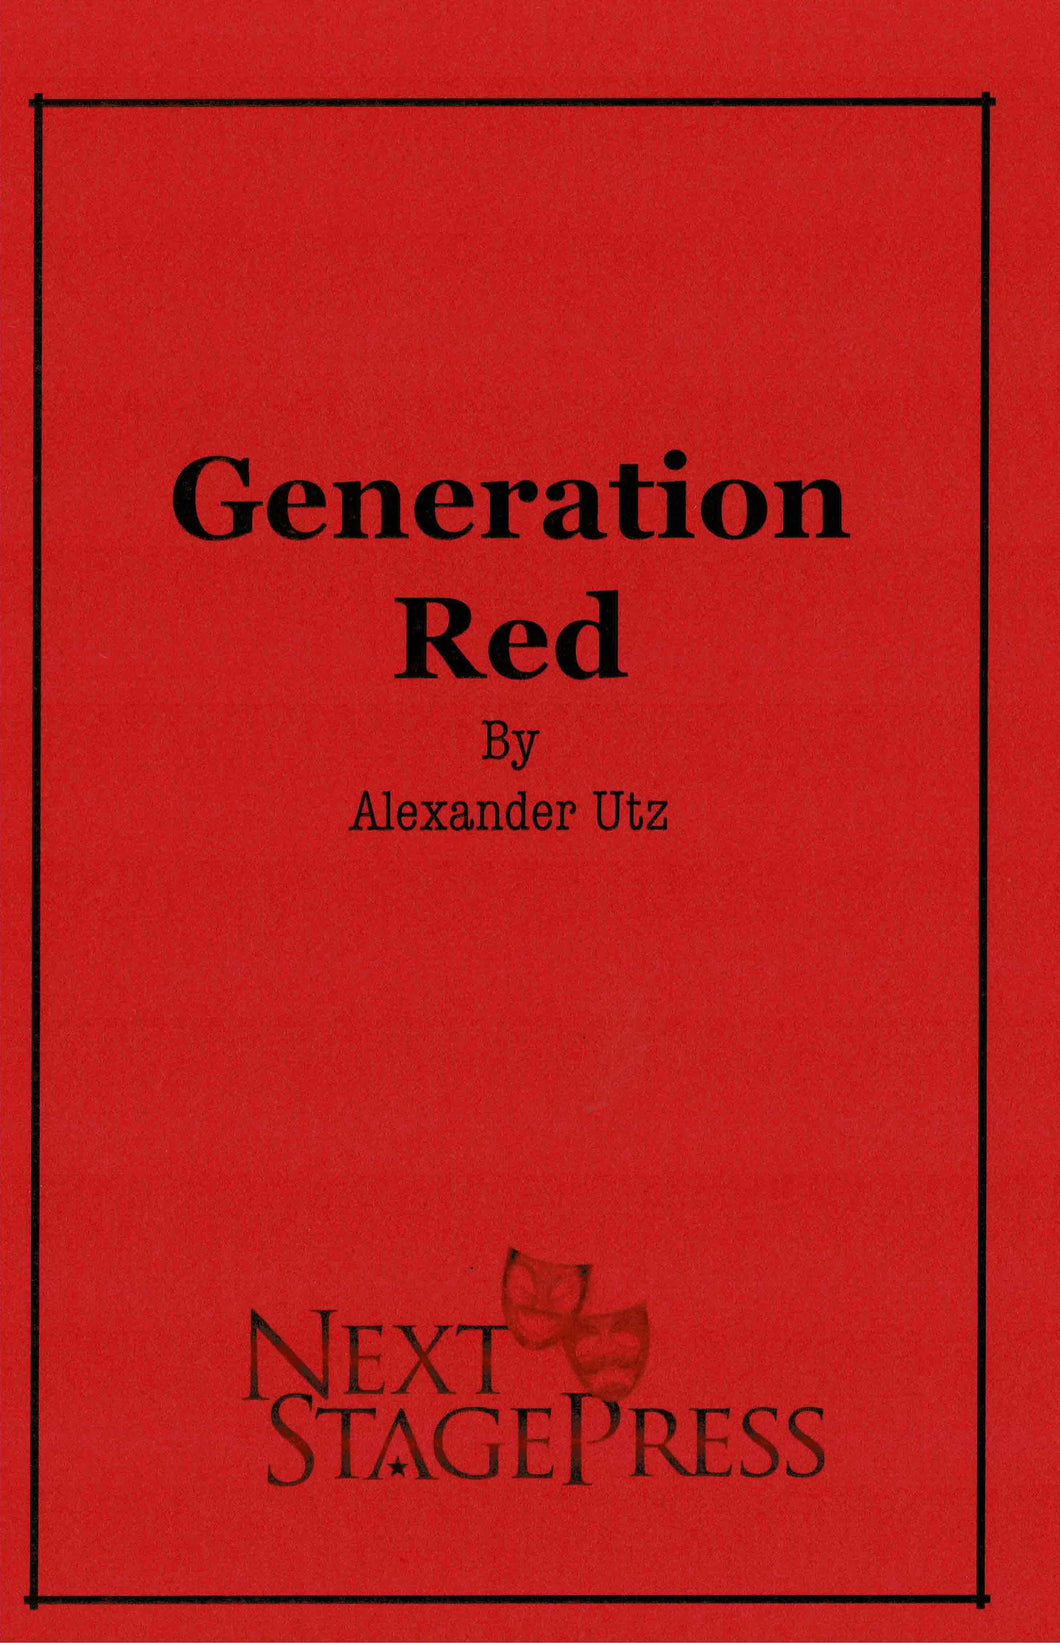 Generation Red by Alexander Utz - Digital Version